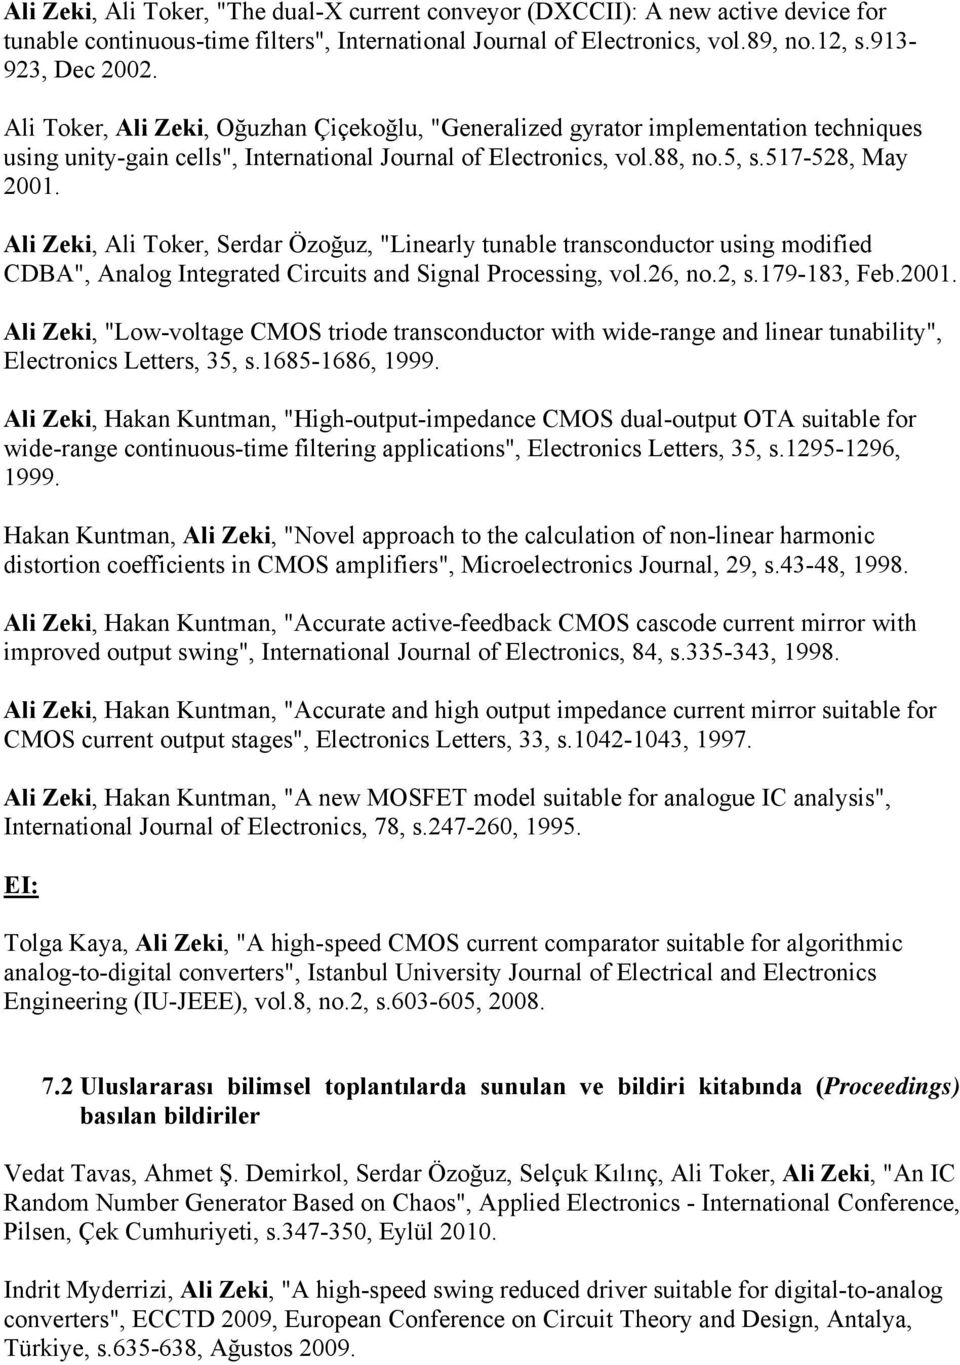 Ali Zeki, Ali Toker, Serdar Özoğuz, "Linearly tunable transconductor using modified CDBA", Analog Integrated Circuits and Signal Processing, vol.26, no.2, s.179-183, Feb.2001.